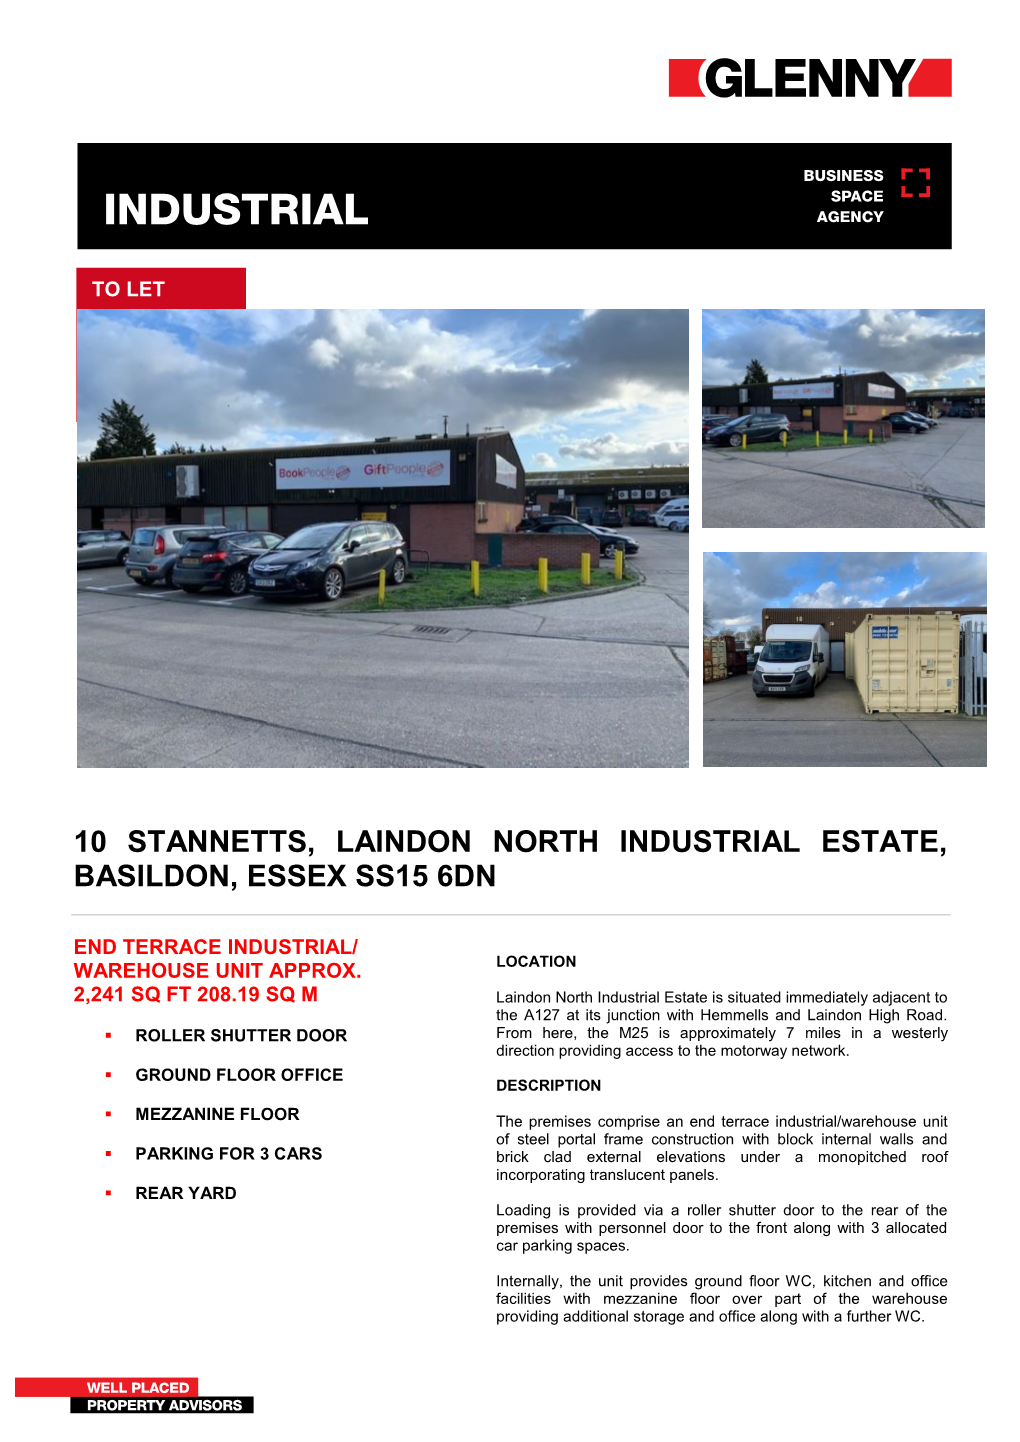 10 Stannetts, Laindon North Industrial Estate, Basildon, Essex Ss15 6Dn